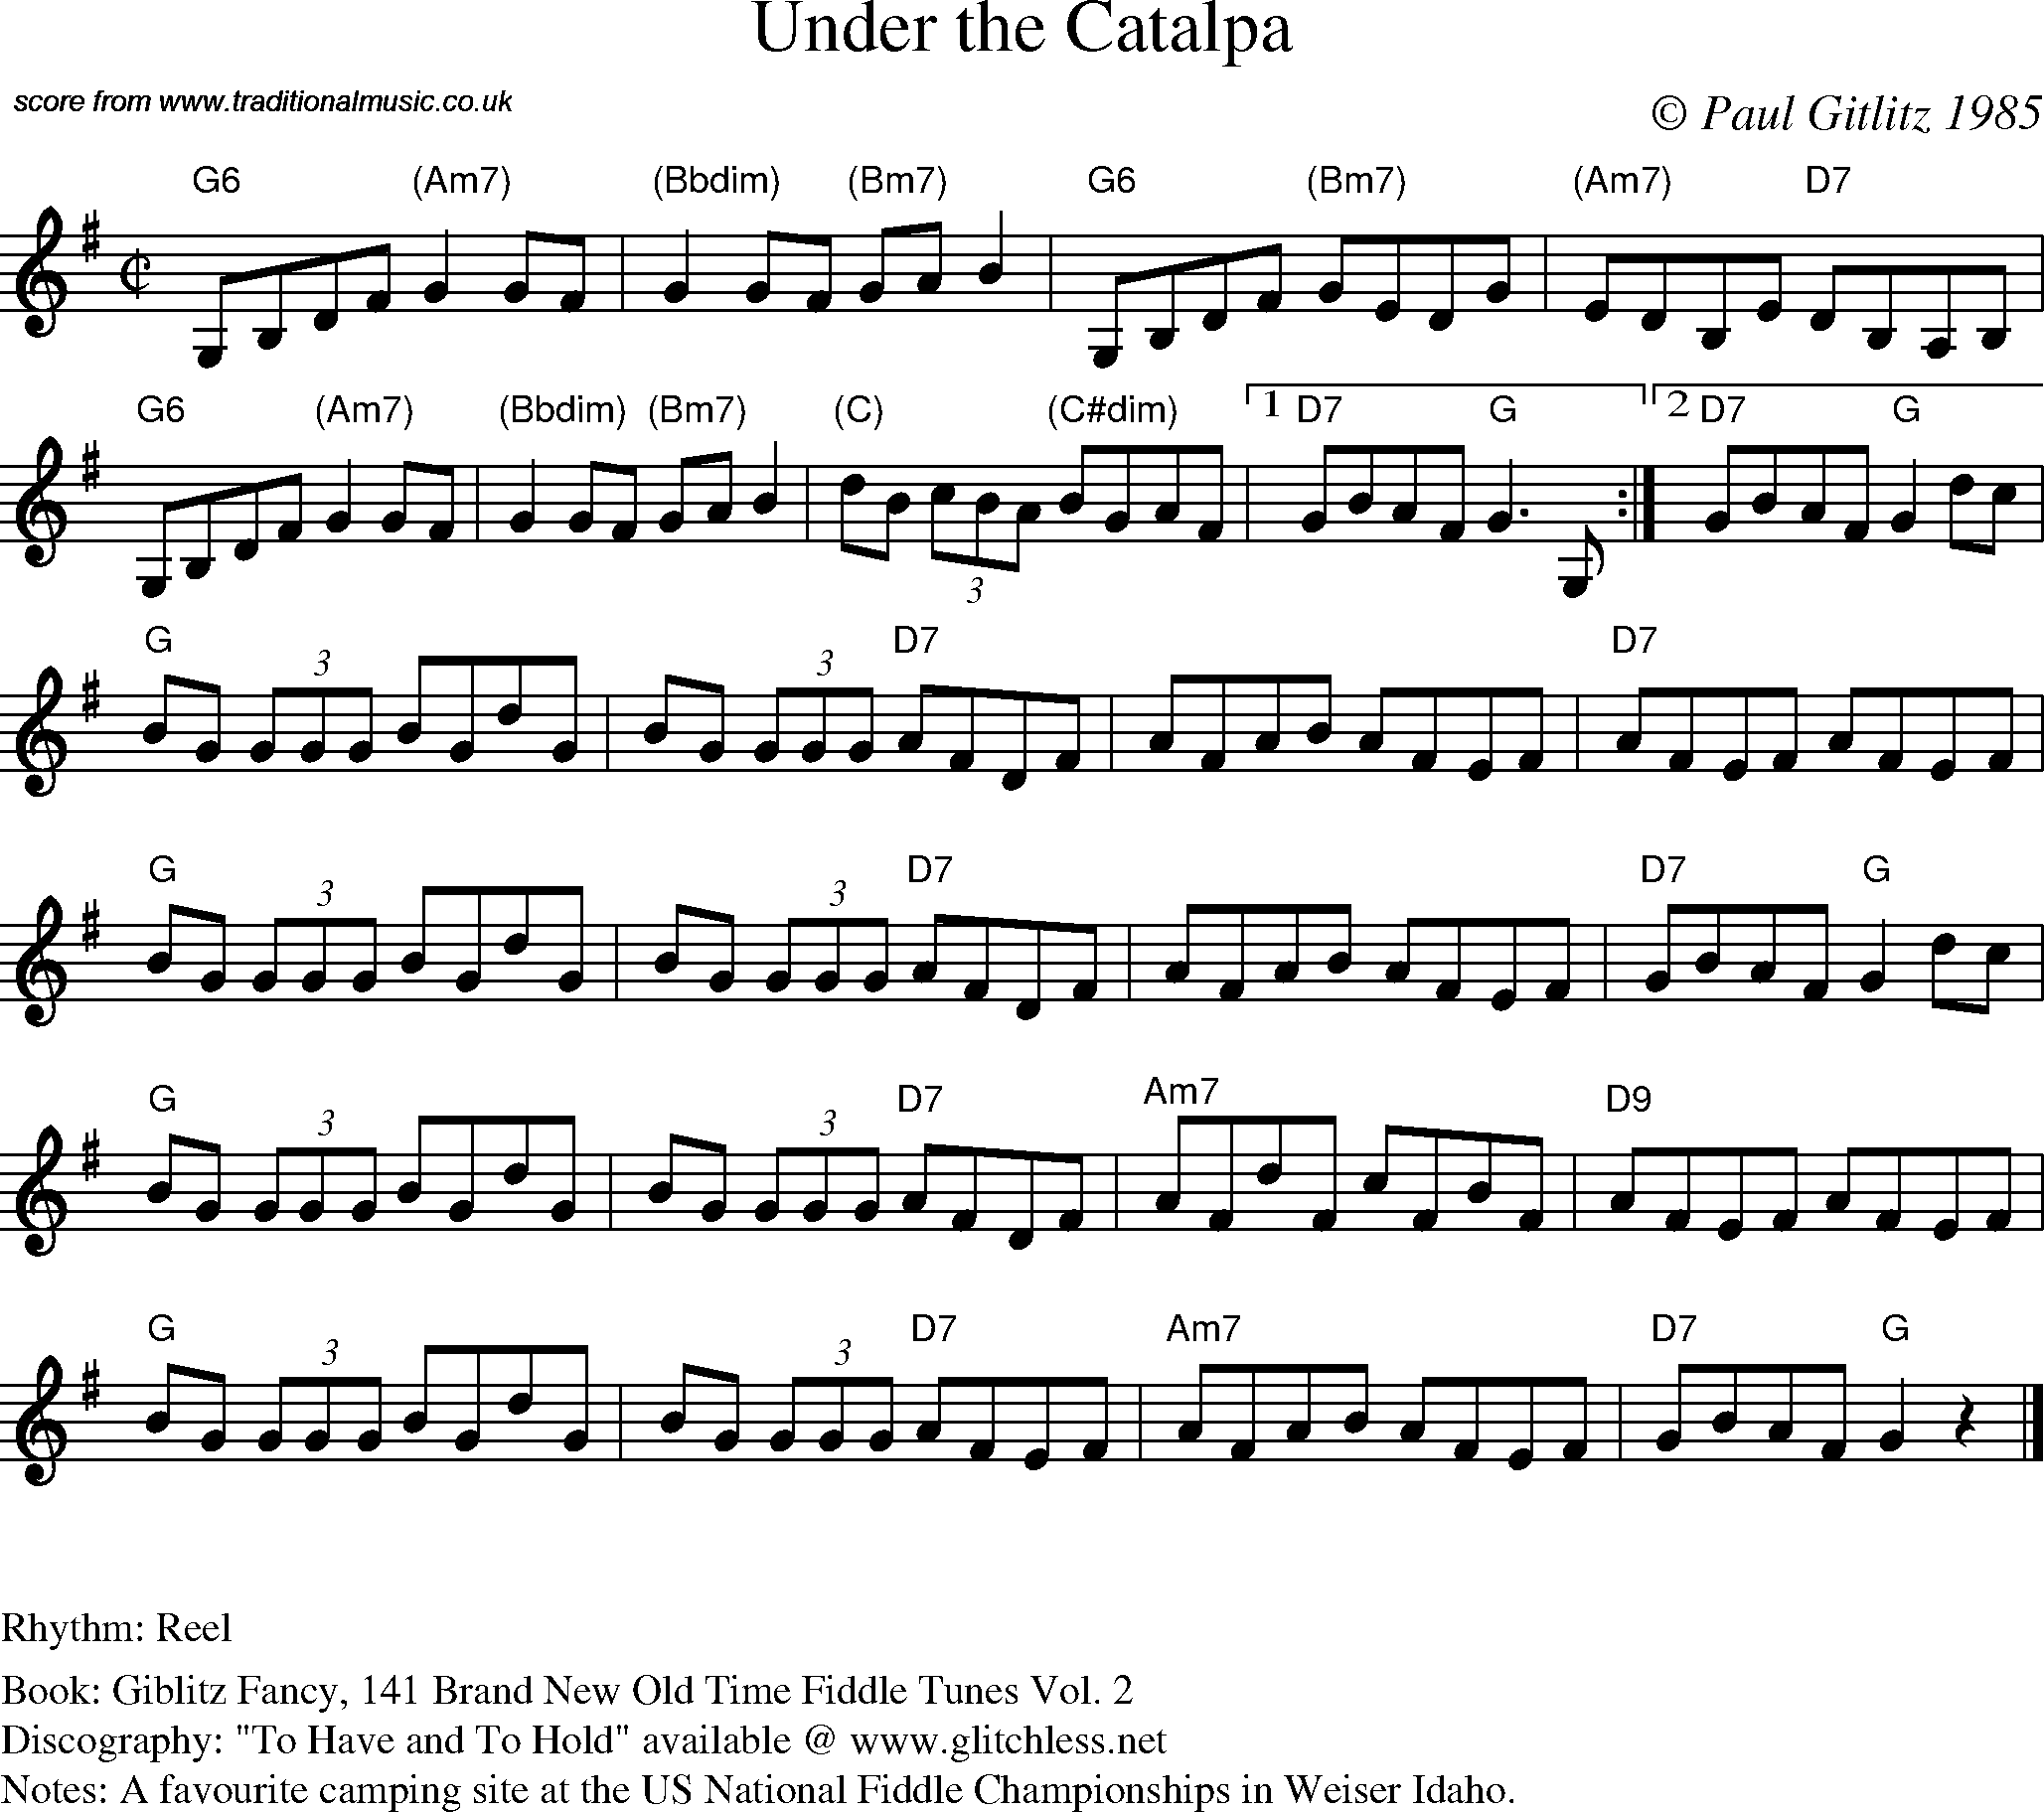 Sheet Music Score for Reel - Under the Catalpa